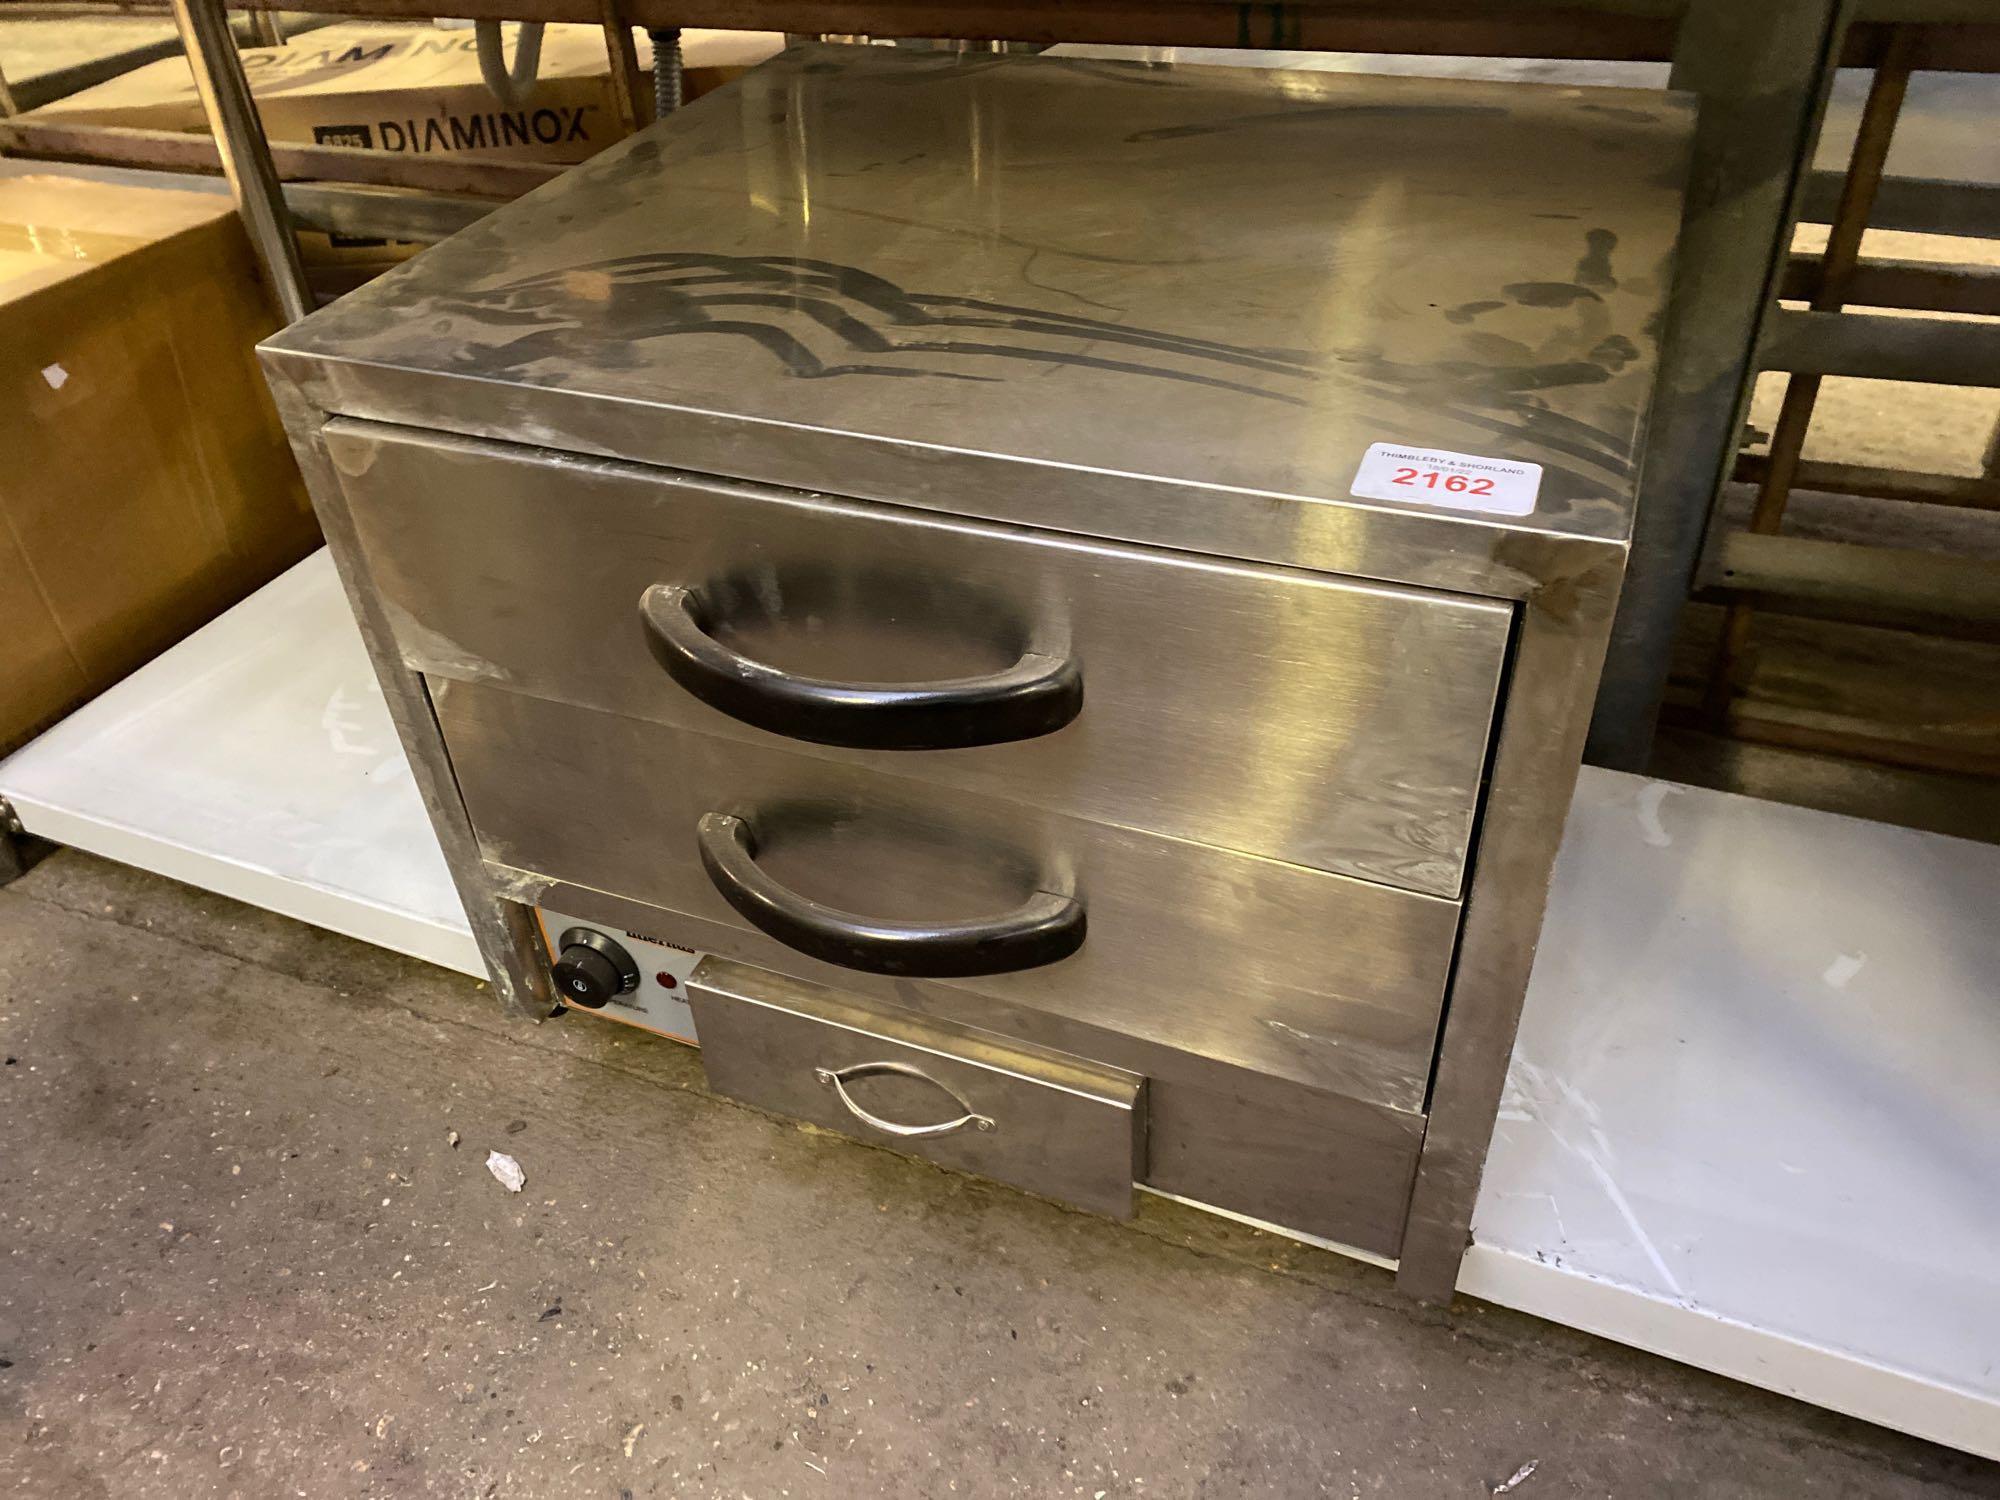 Infernus two drawer warming oven